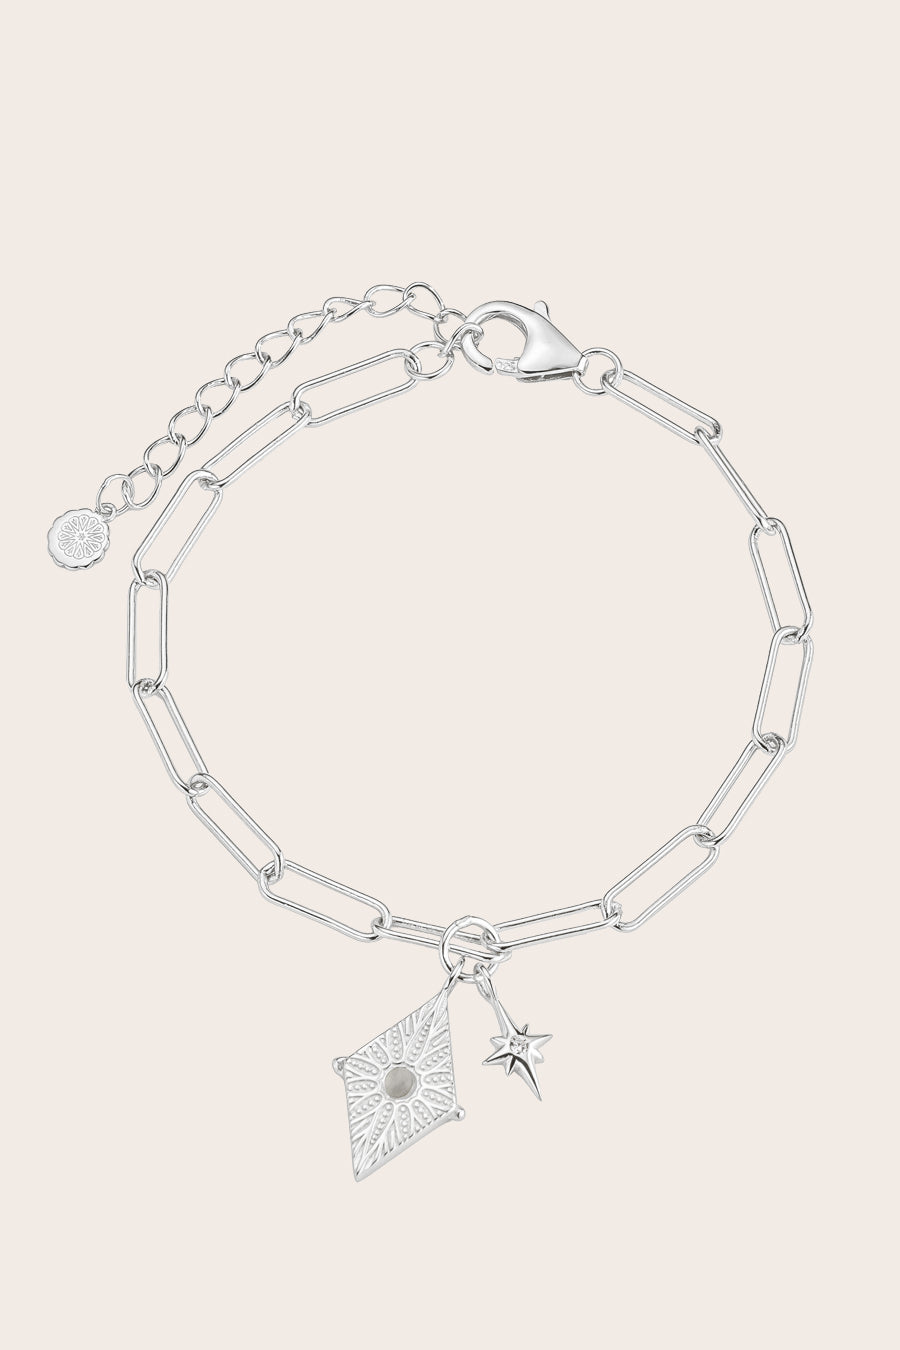 Silver North Star Bracelet on cream background